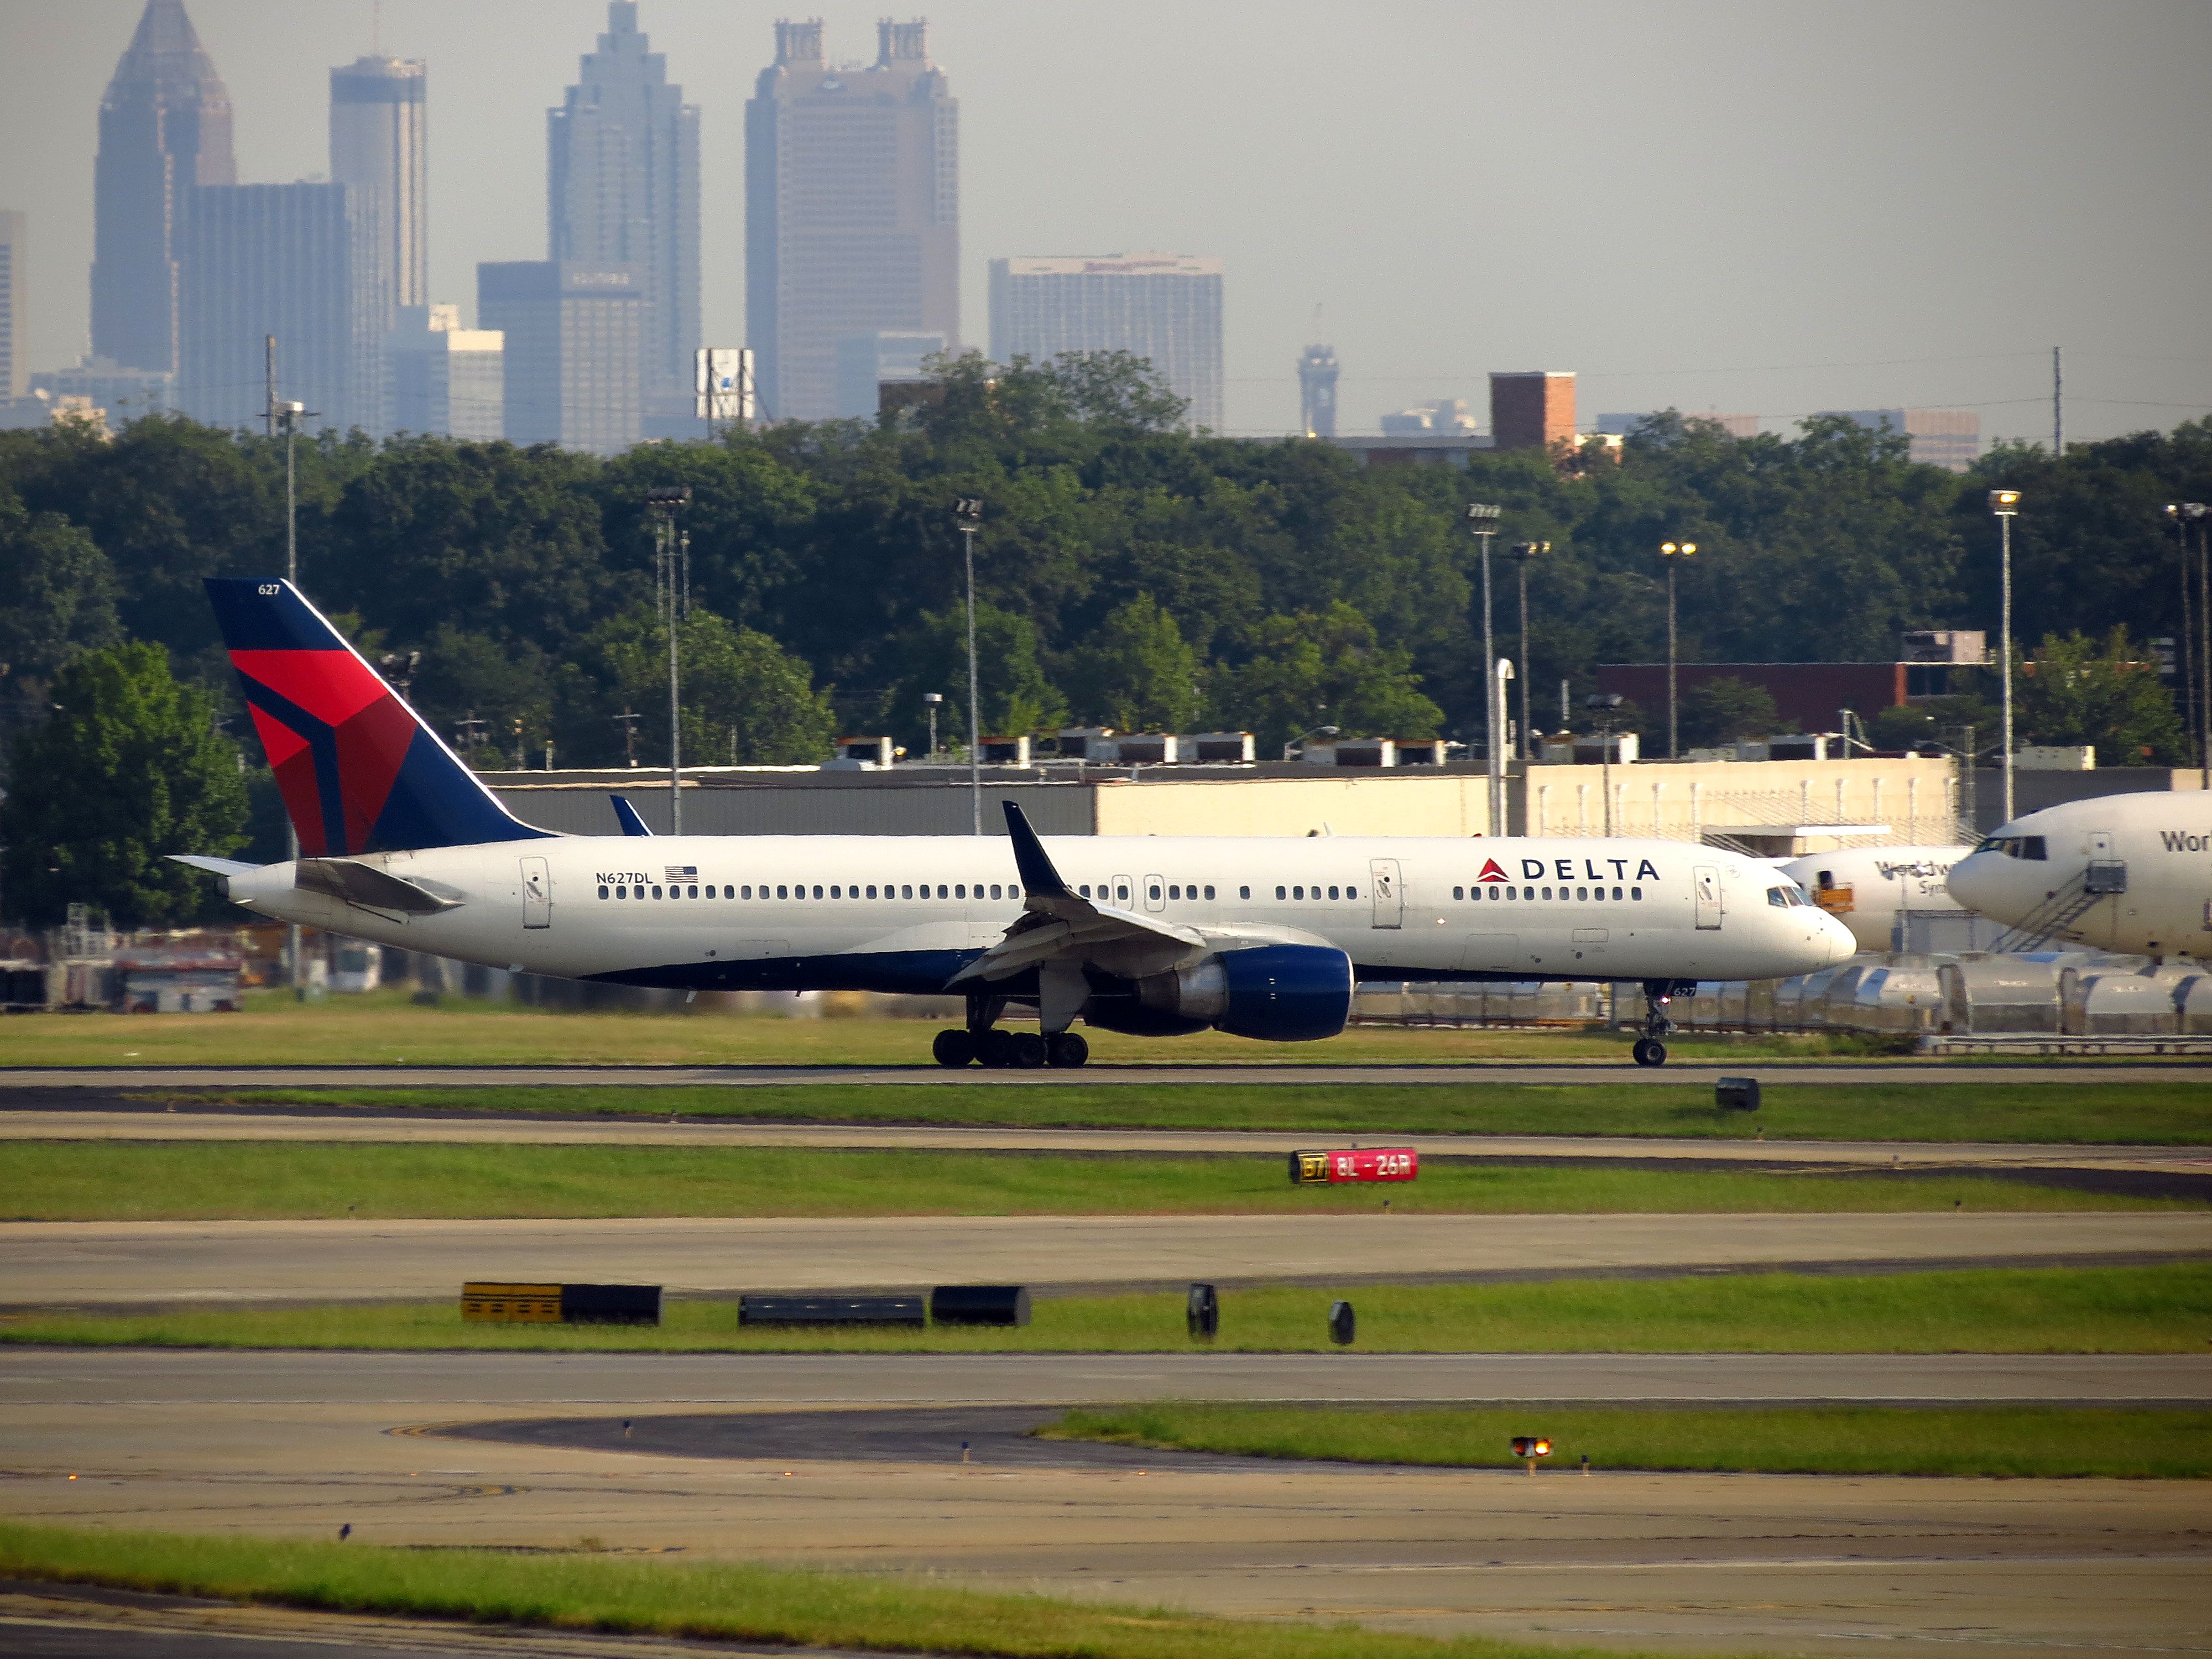 File:Delta plane and Atlanta skyline.jpg - Wikimedia Commons